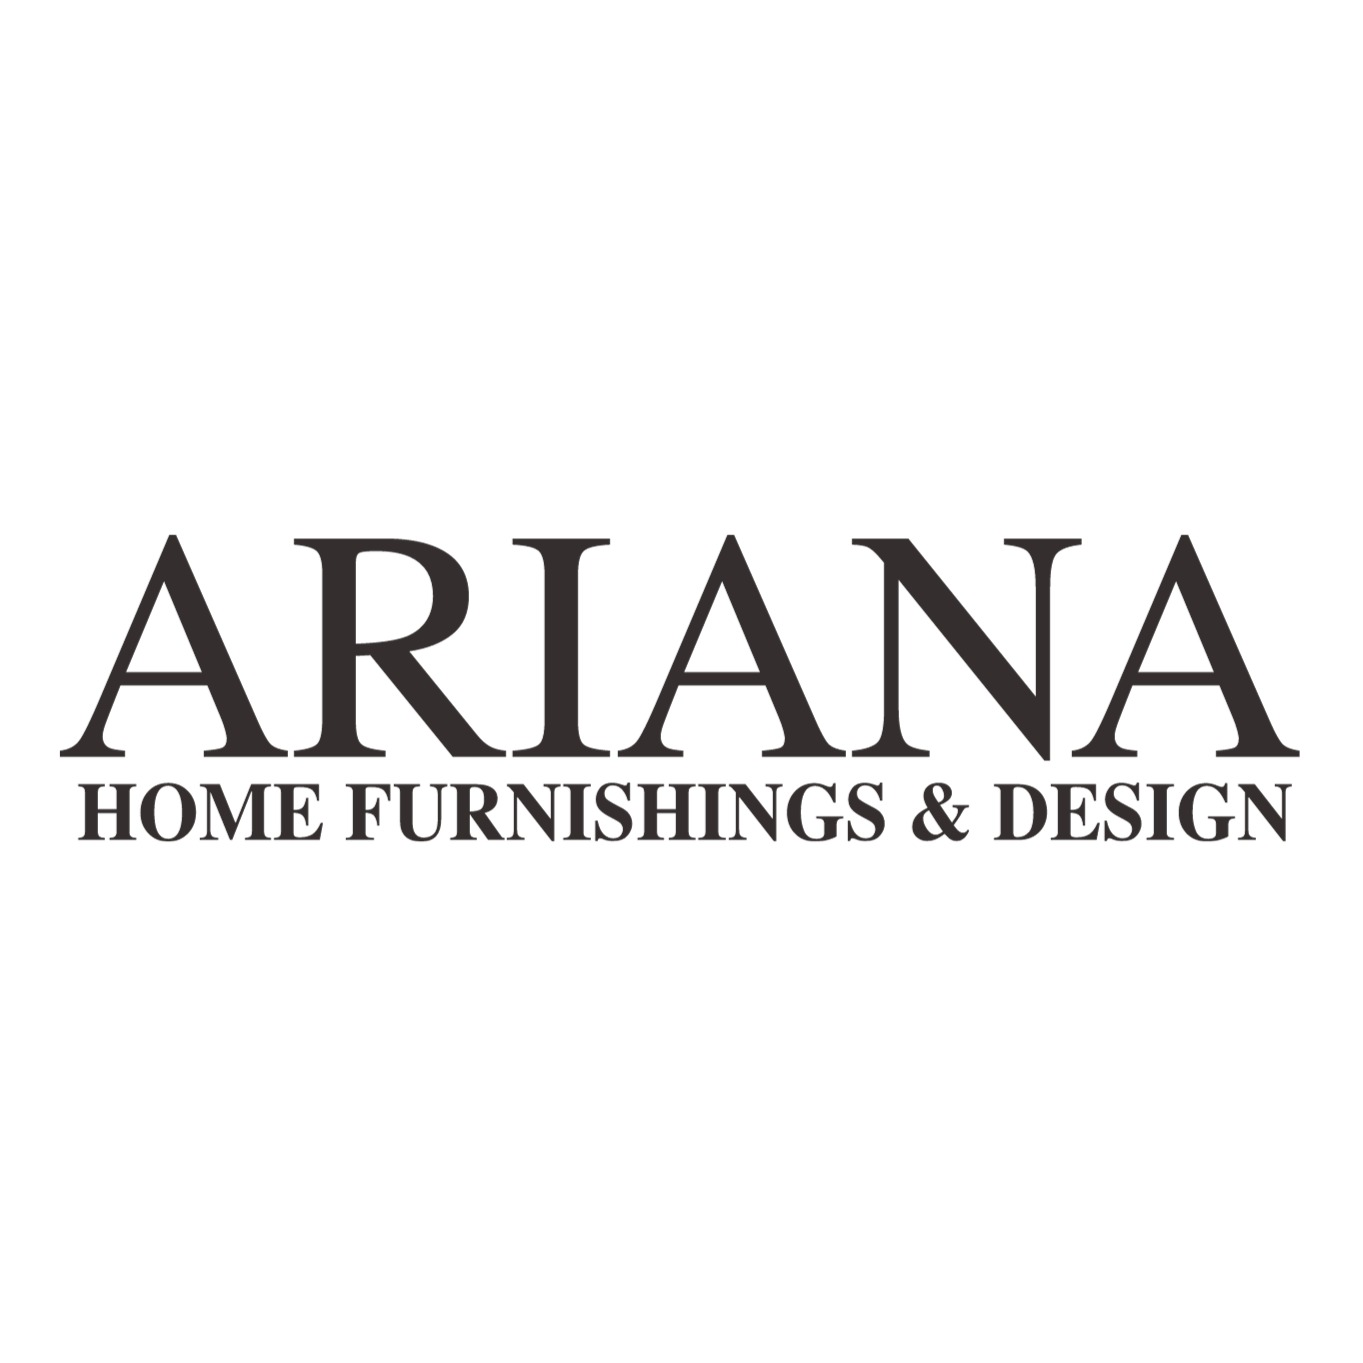 Ariana Home Furnishings: Luxury Furniture in Cumming, GA